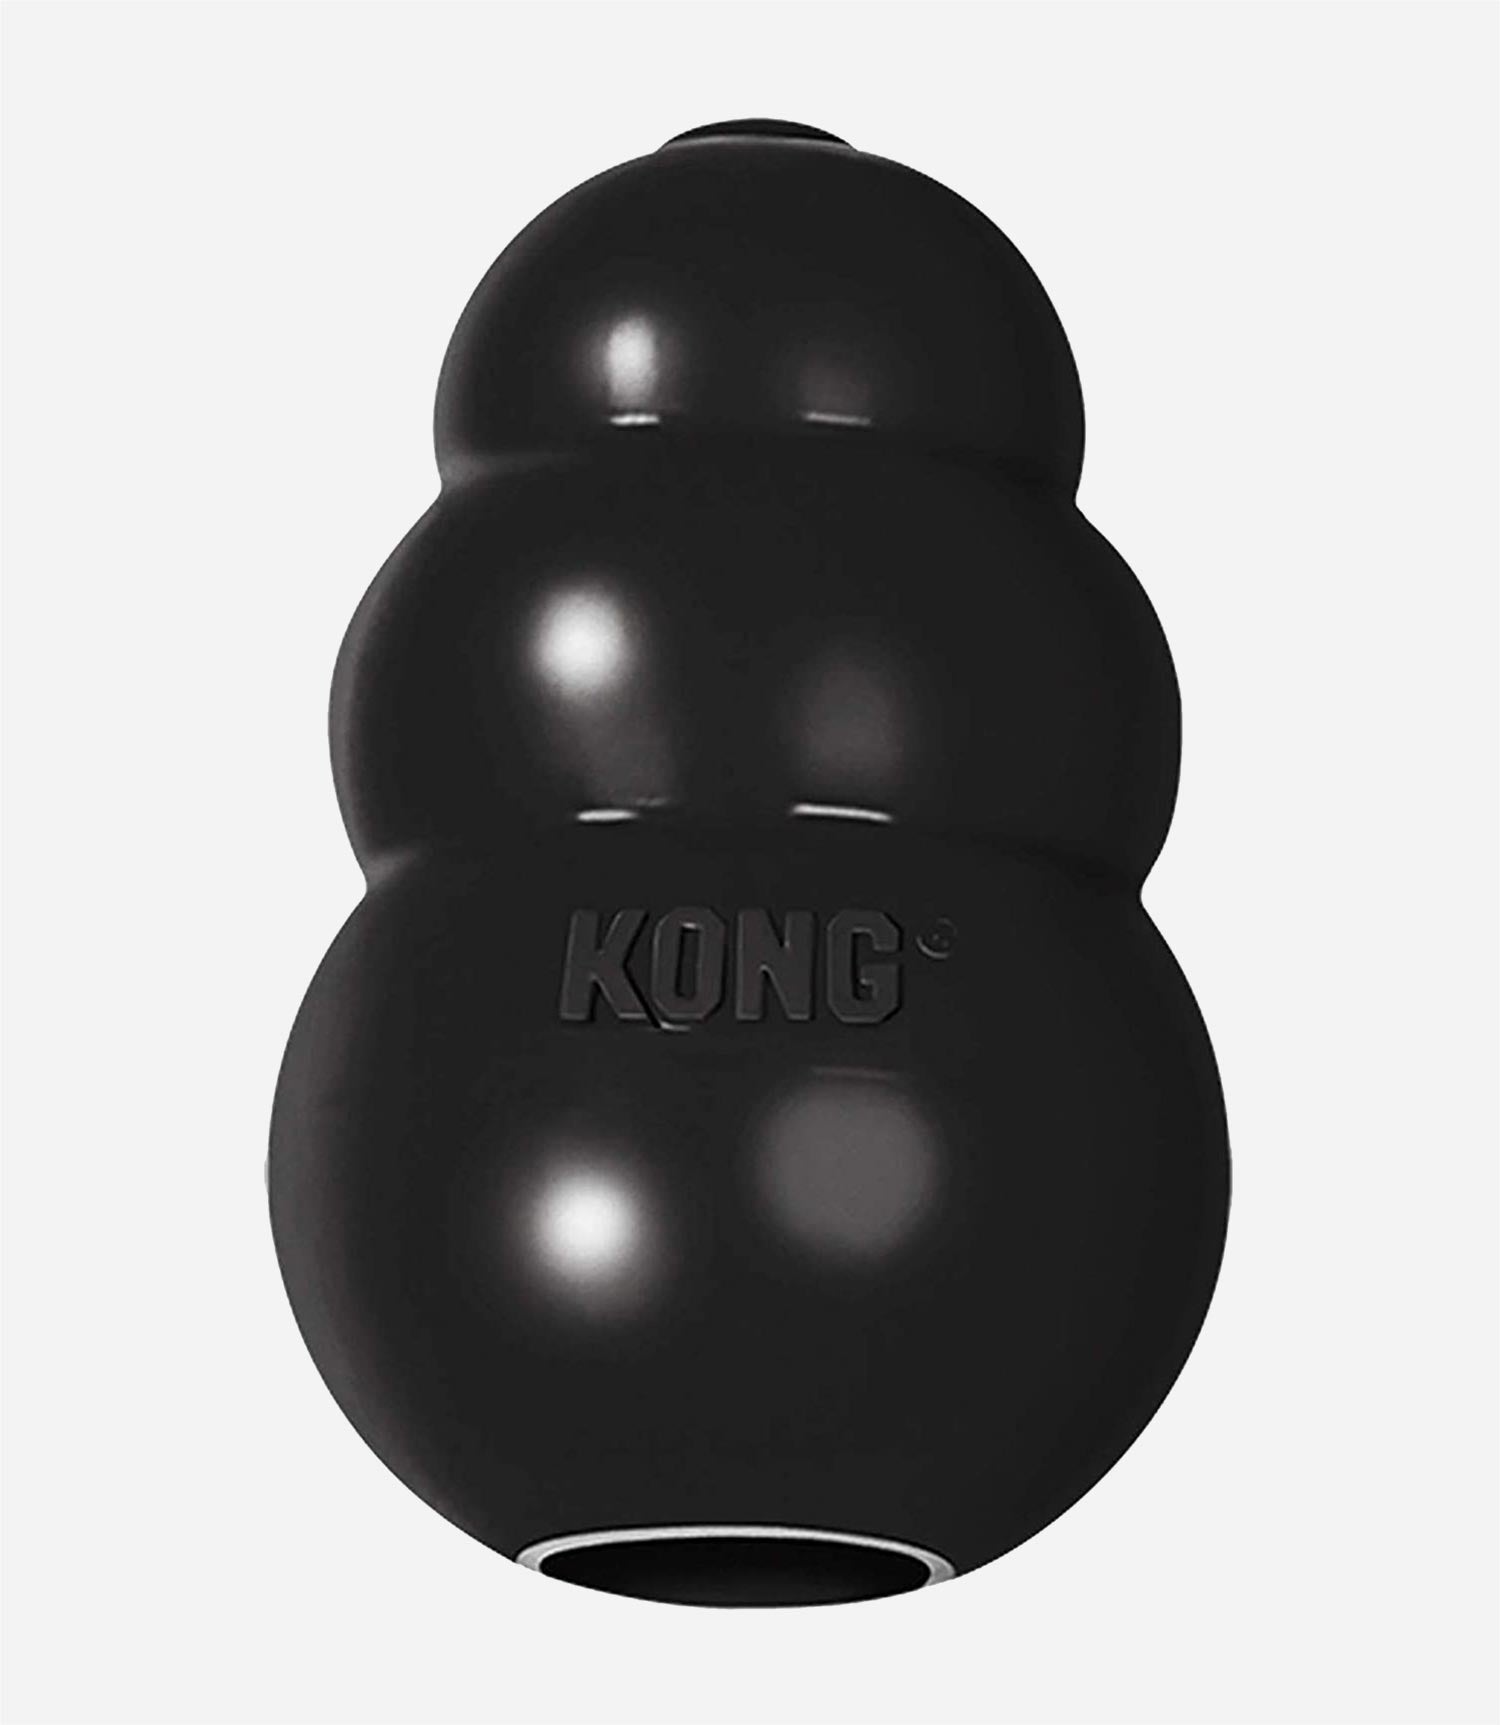 Kong Extreme Dog Toy - Nest Pets